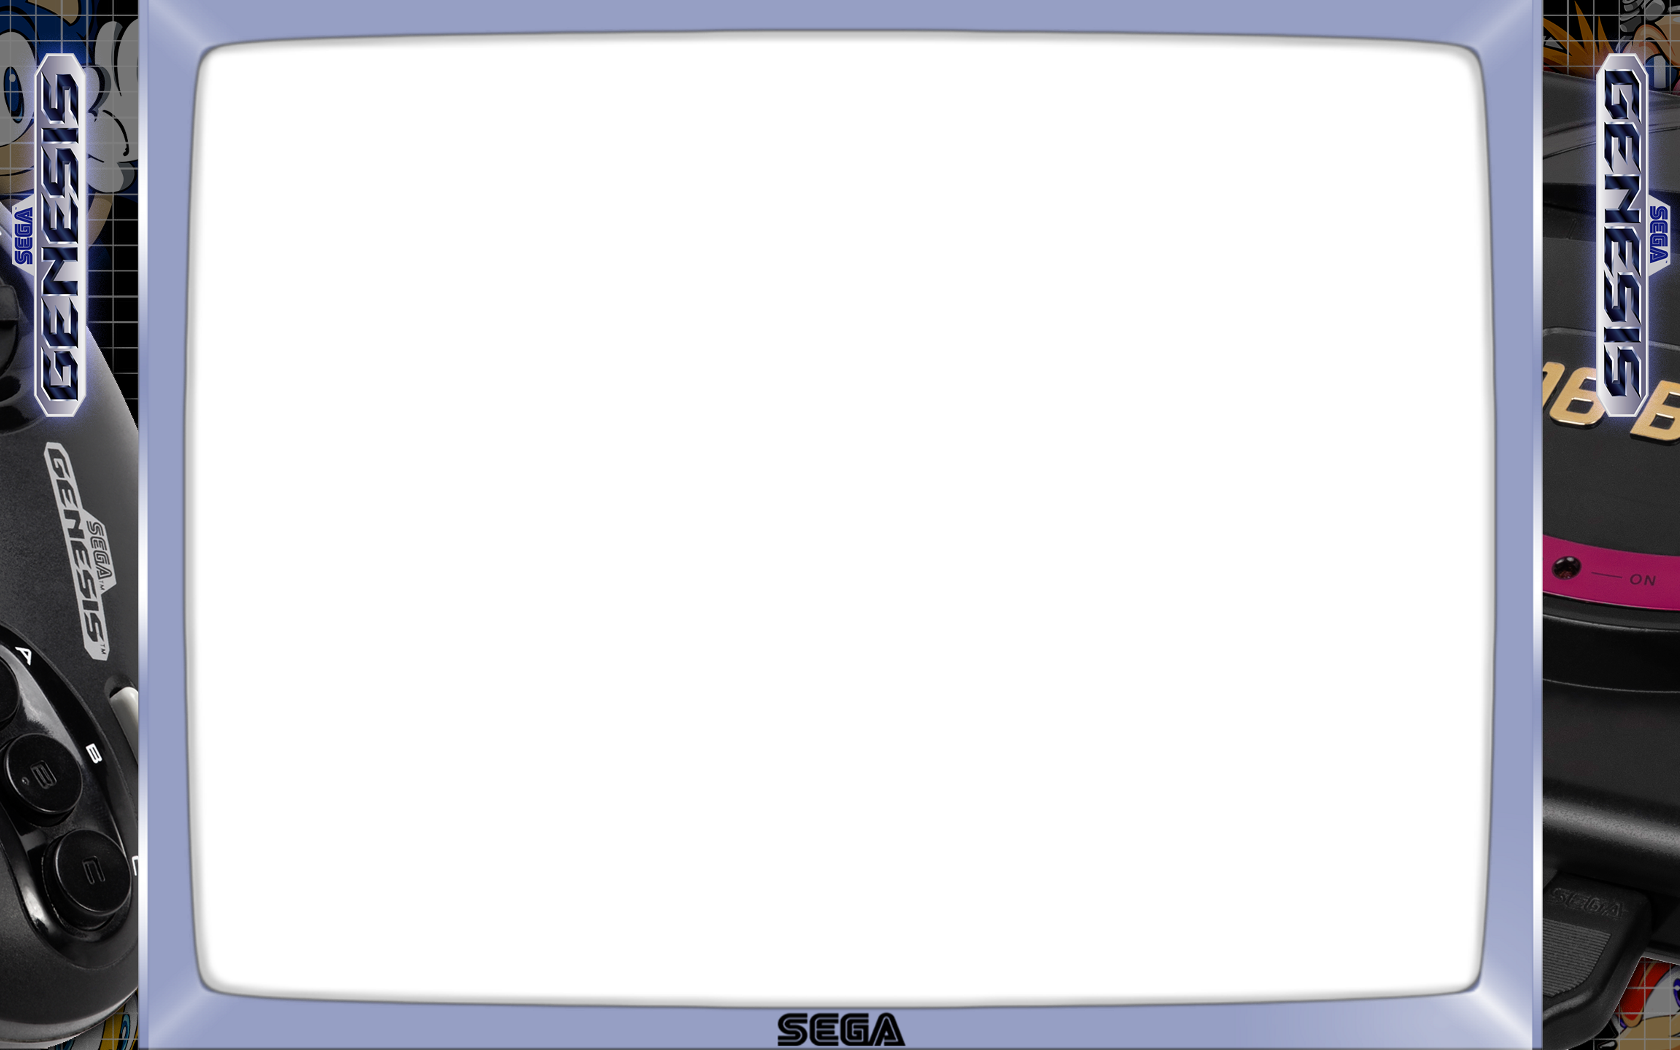 Оверлей для RETROARCH Sega. RETROARCH оверлеи телевизор. Оверлей для RETROARCH телевизор Samsung. PS Vita RETROARCH Overlays Sega. Retroarch sega